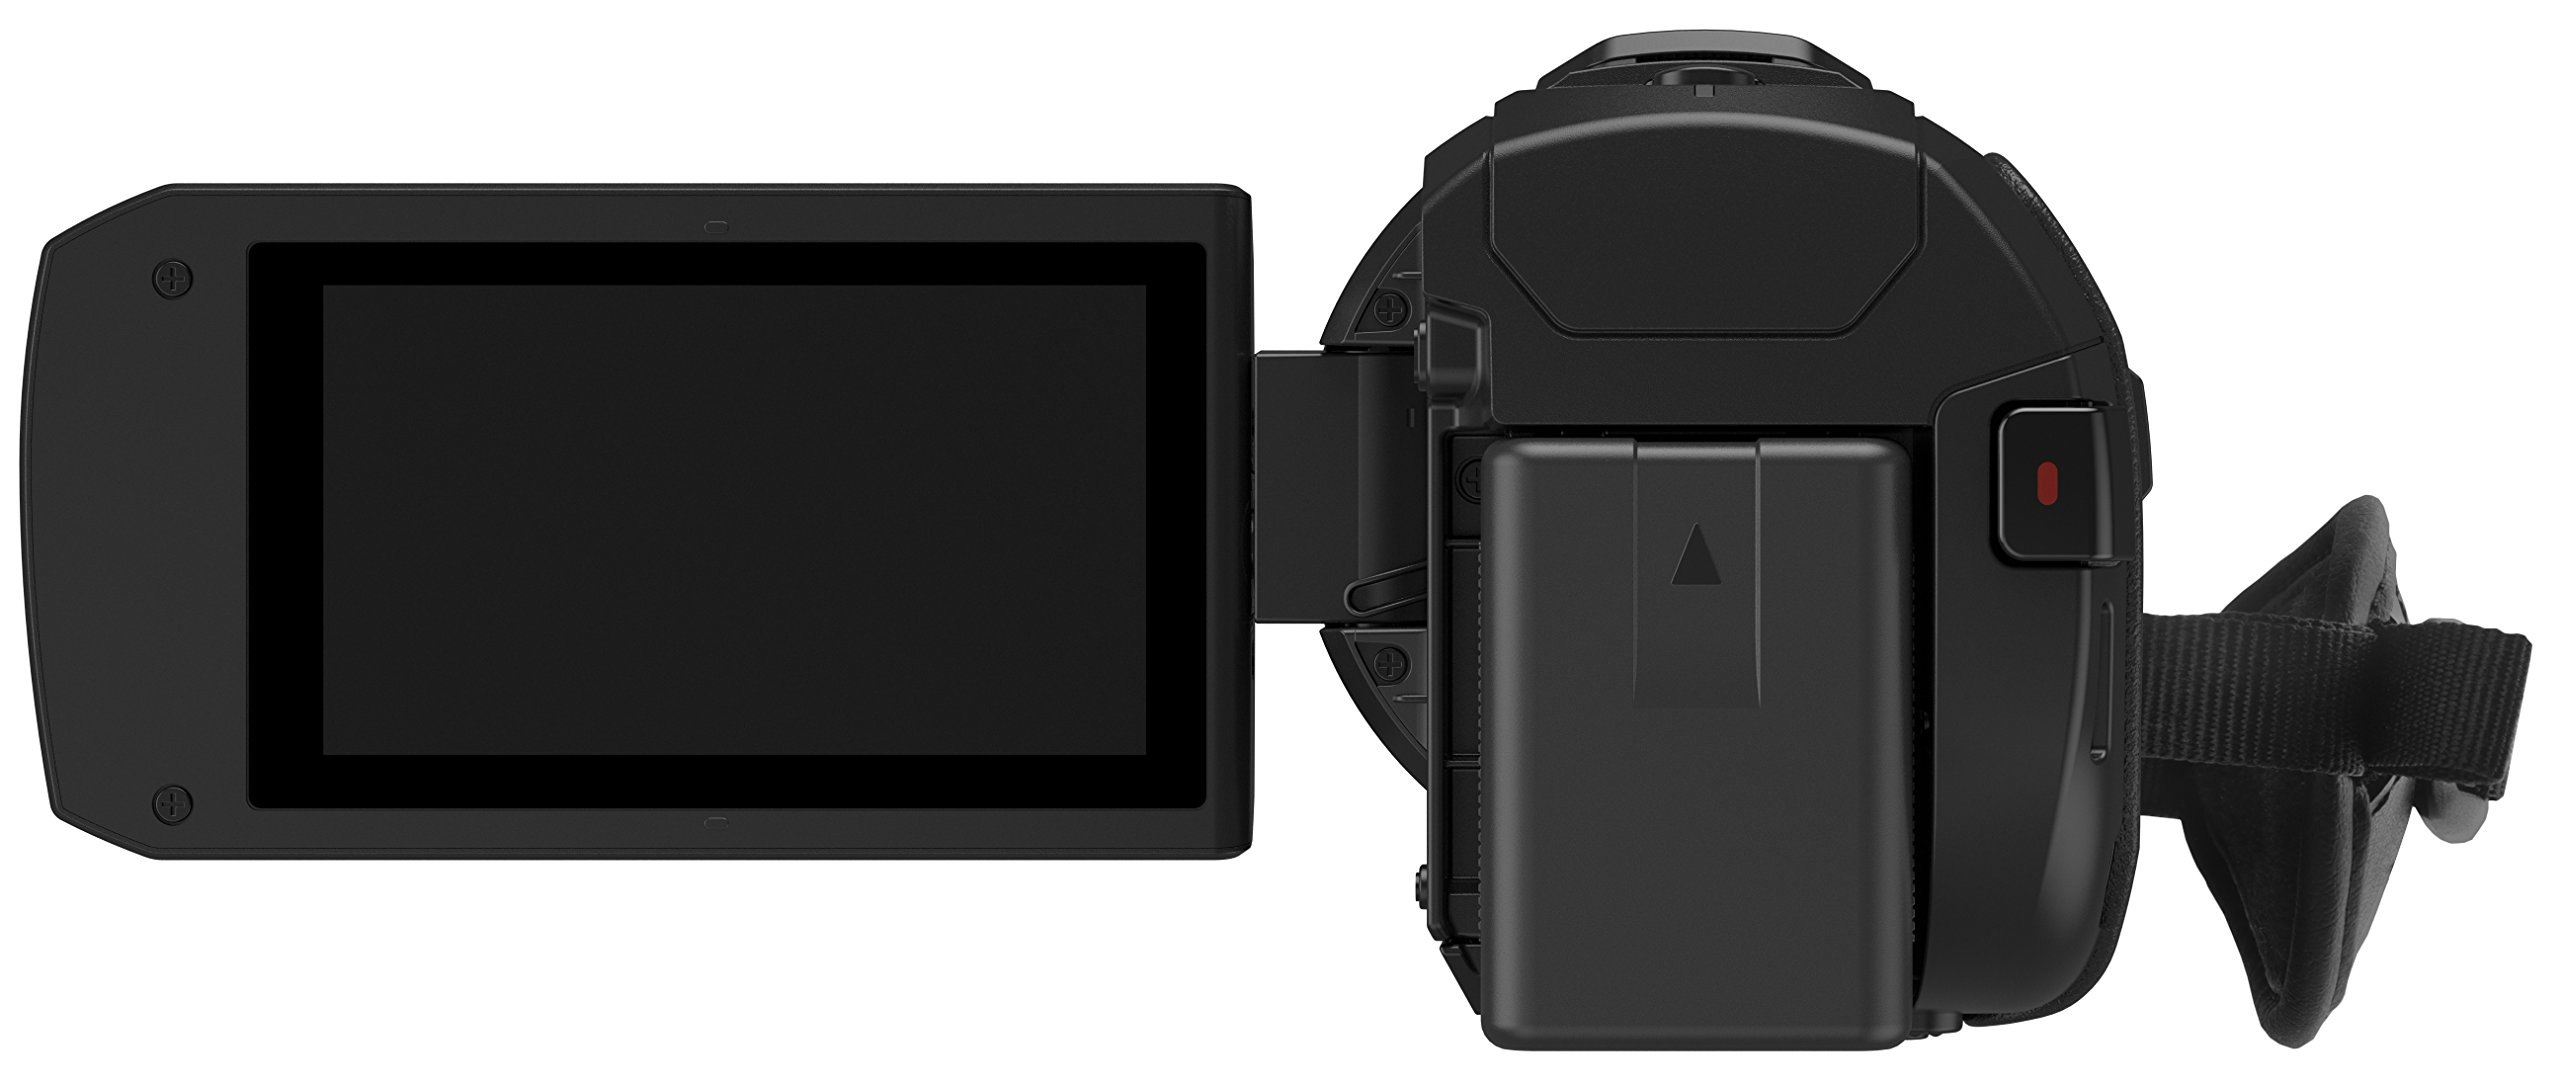 Panasonic HC-V800K FHD Cinema-like Camcorder, 24x Leica Dicomar Lens, 1/2.5